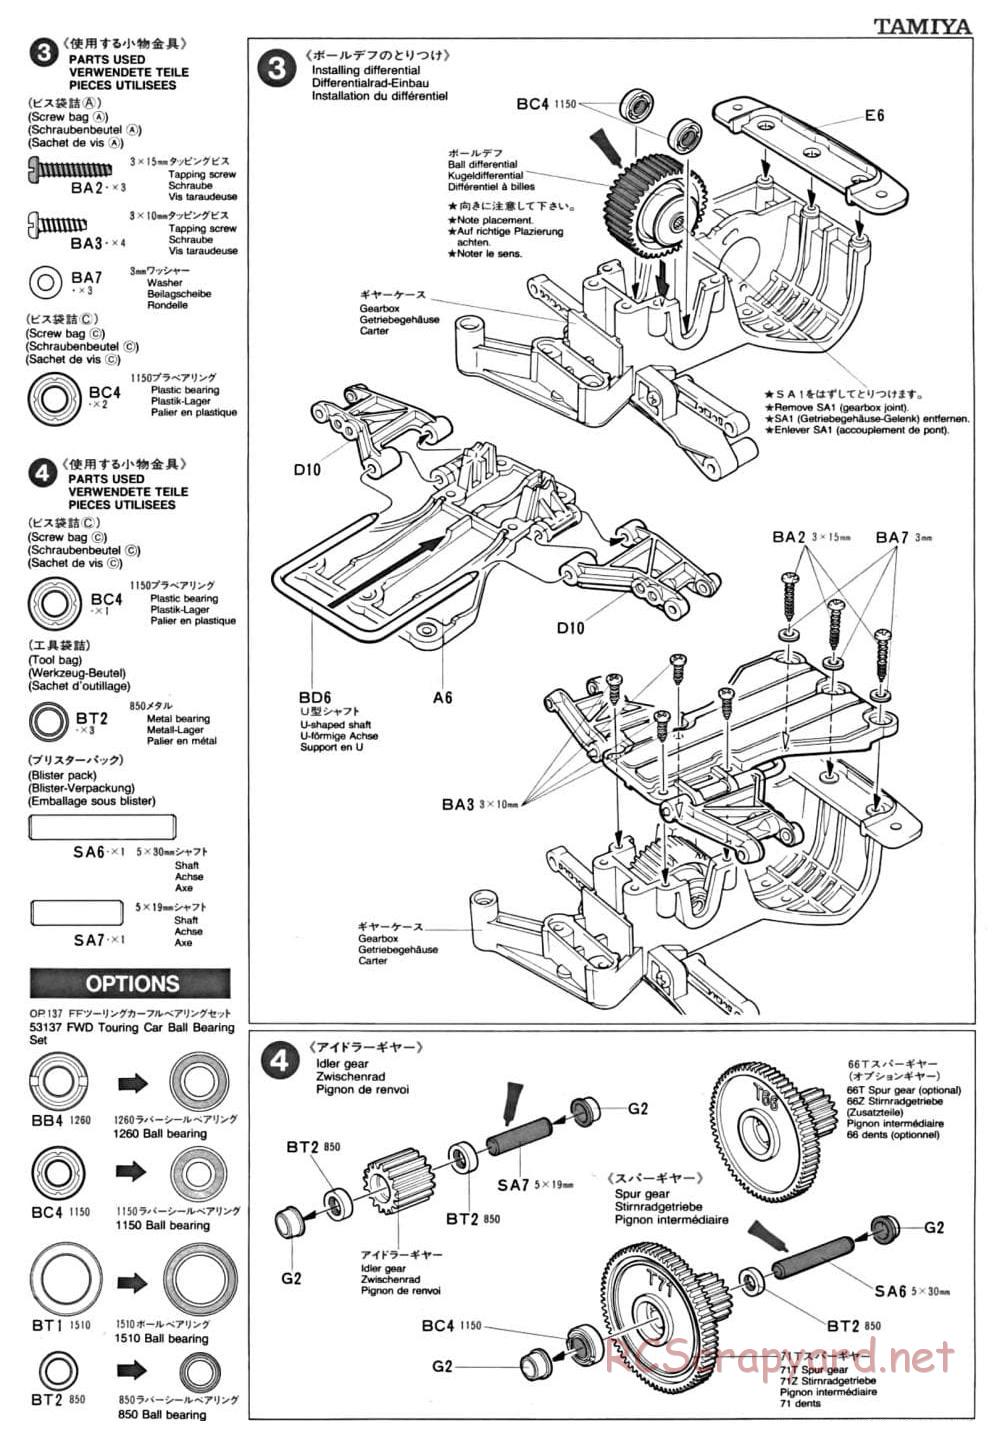 Tamiya - FF-01 Chassis - Manual - Page 5